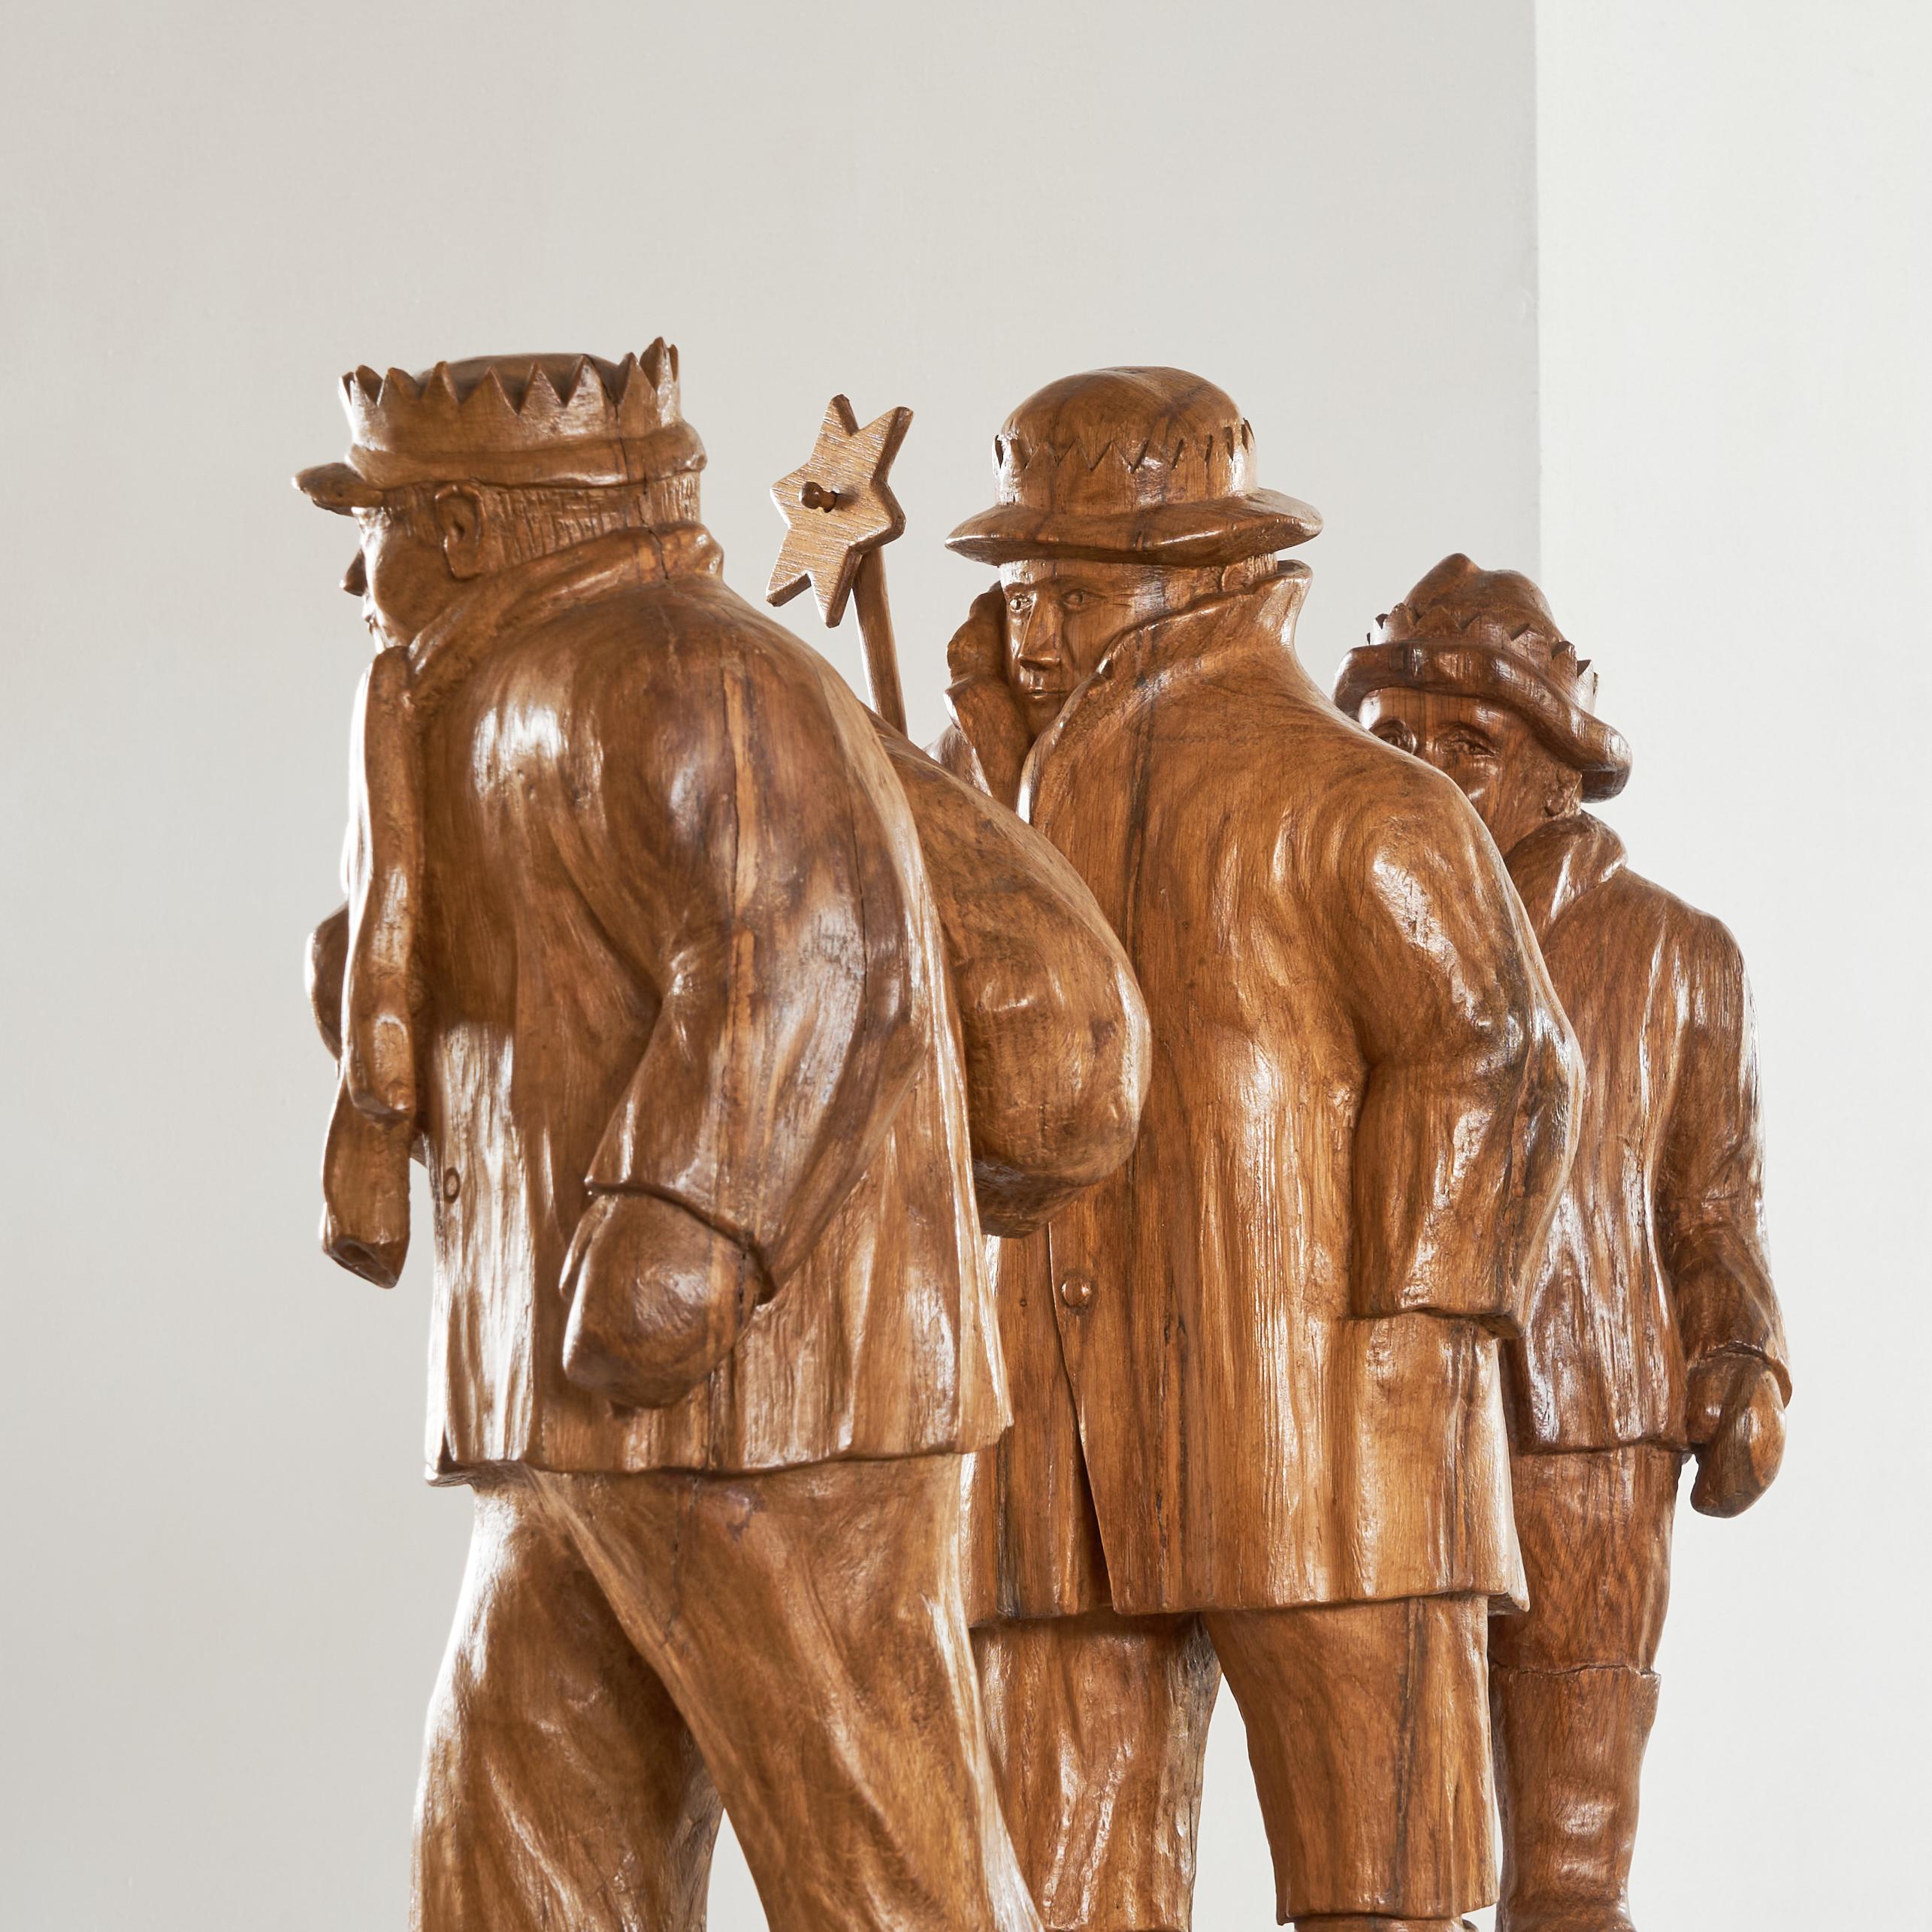 20th Century Felix Timmermans '3 Wise Men' Flemish Folk Art Sculptures in Carved Wood 1970 For Sale